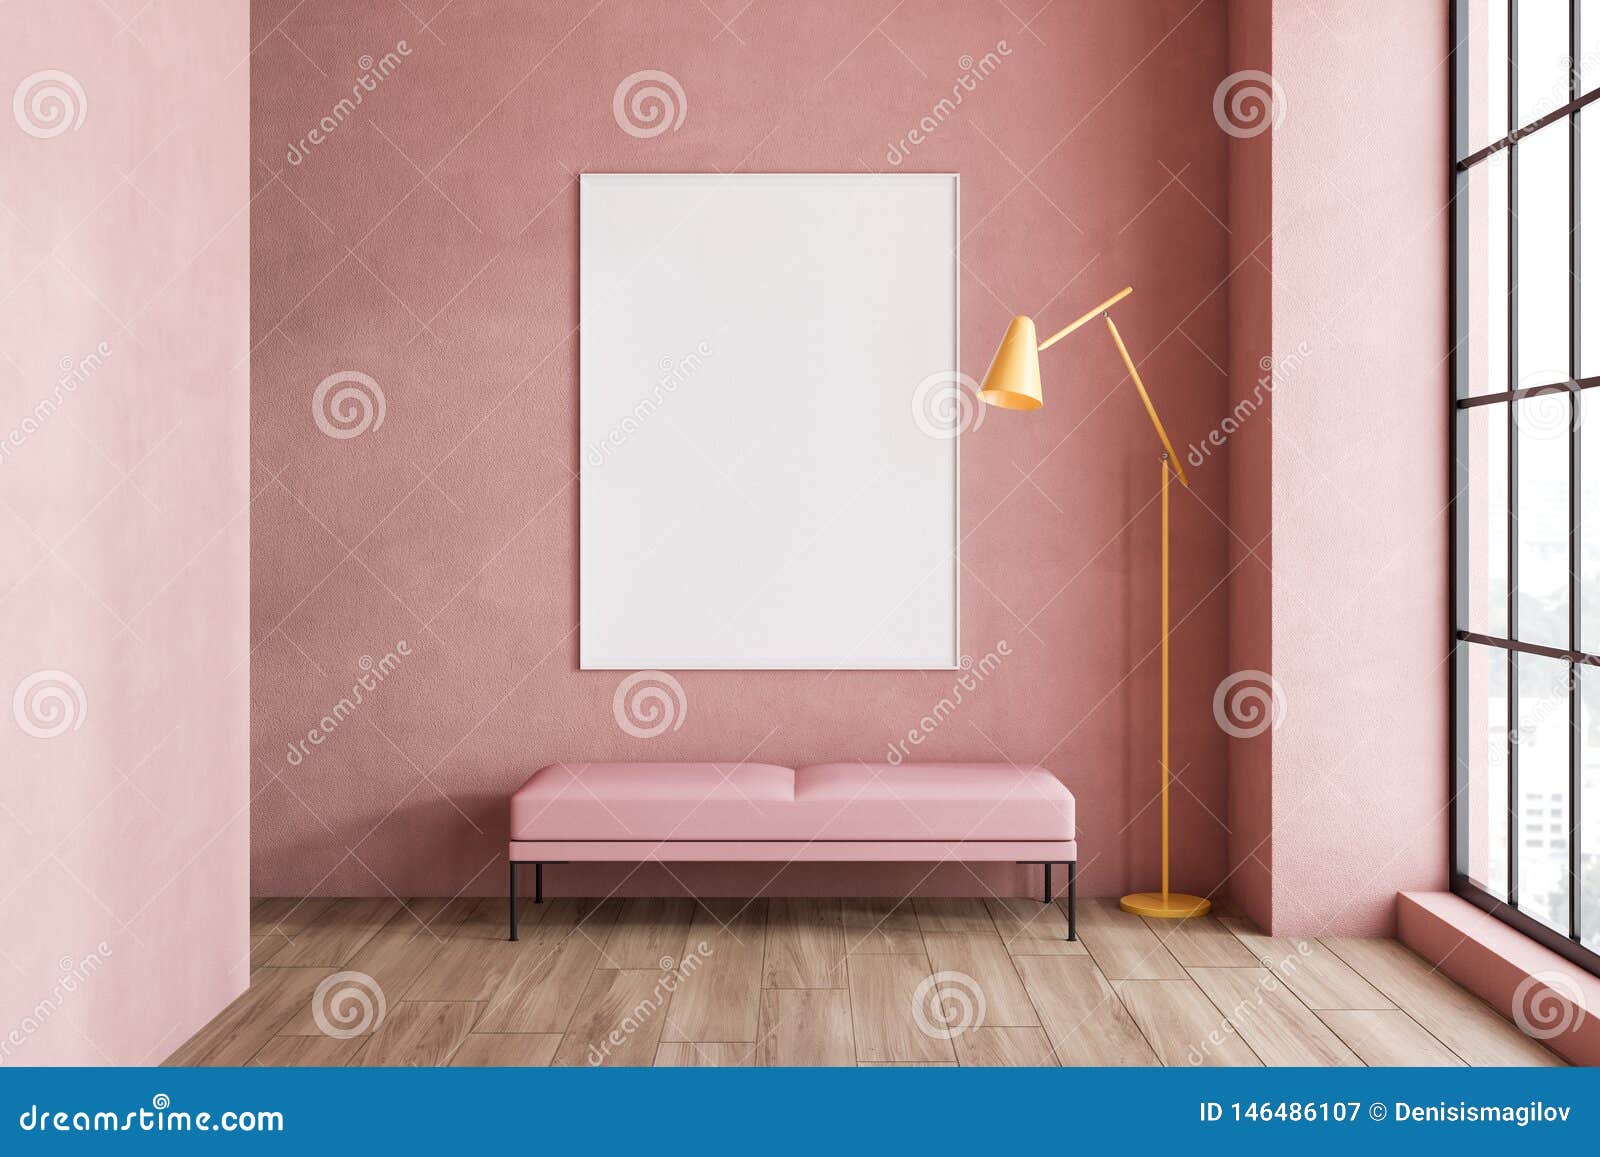 Pink Living Room Bench And Poster Stock Illustration Illustration Of Mock Decor 146486107